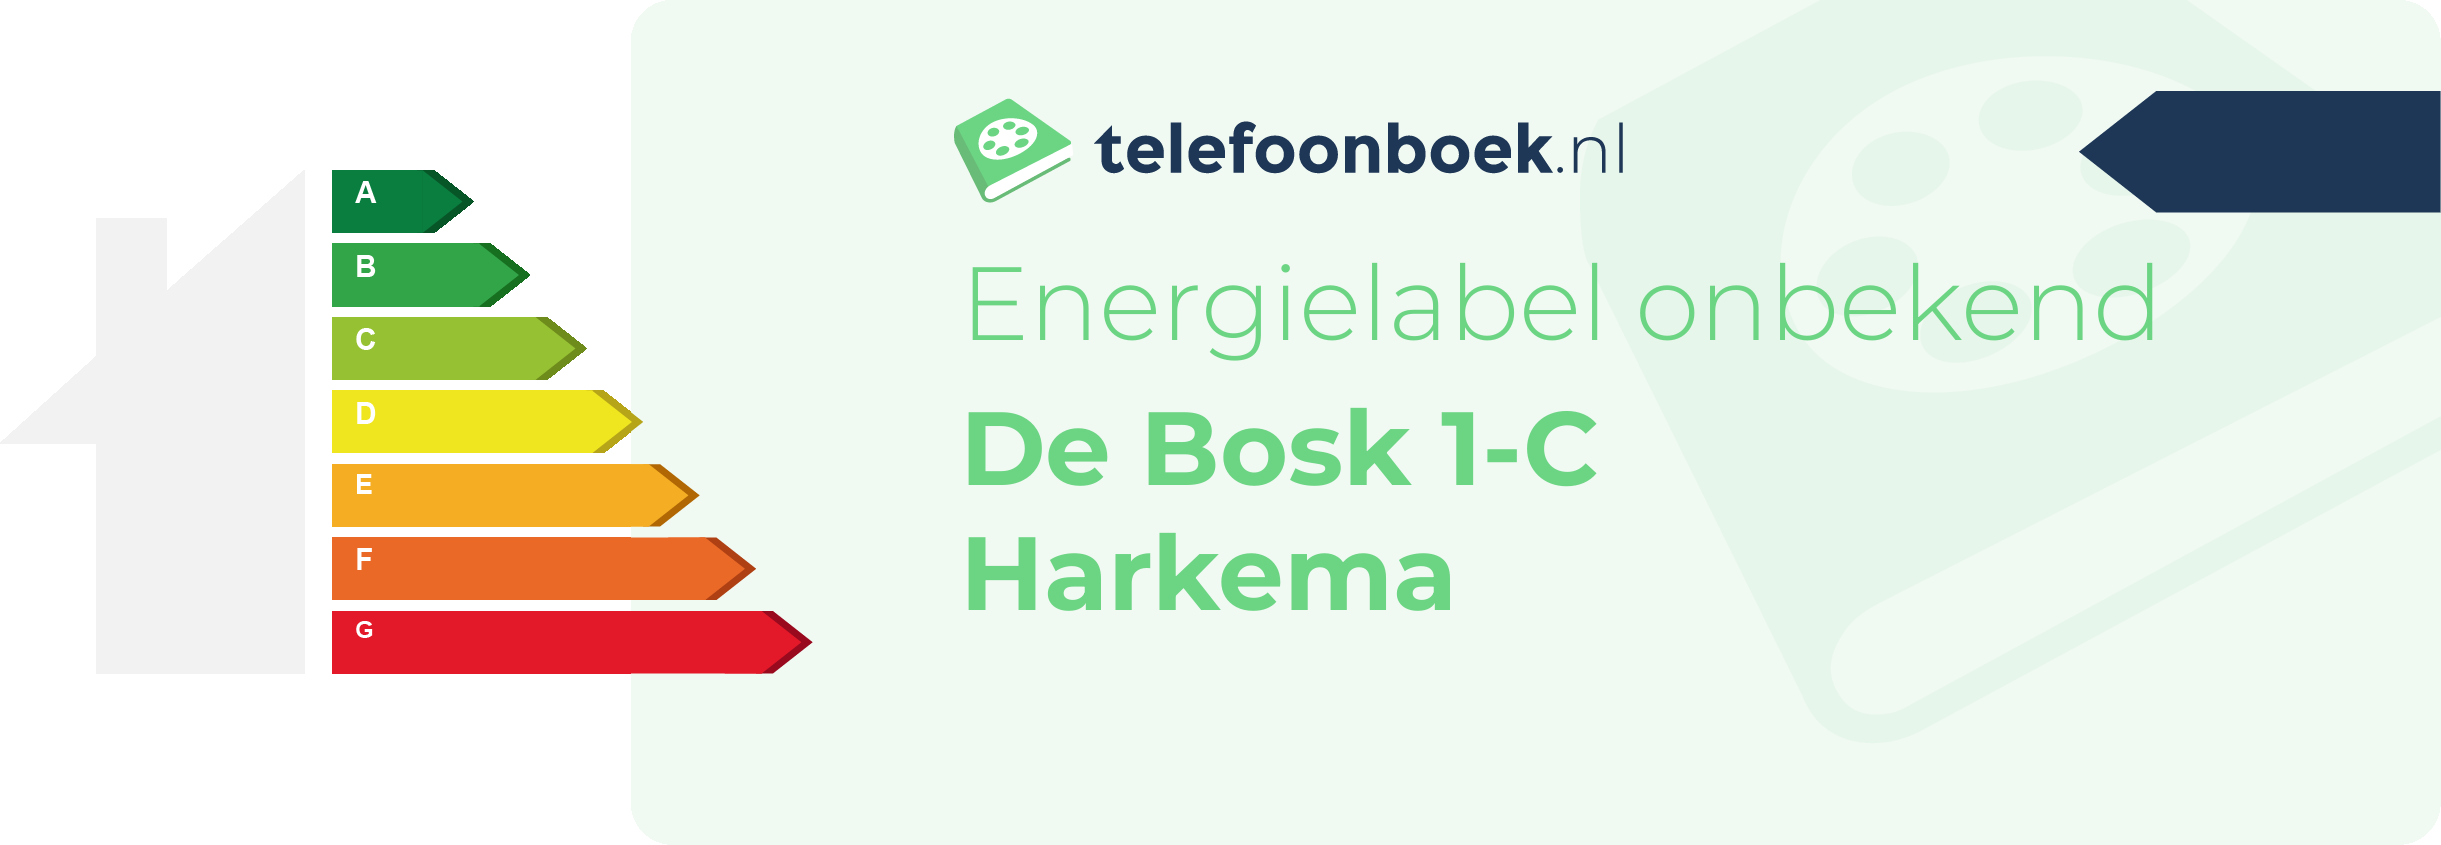 Energielabel De Bosk 1-C Harkema